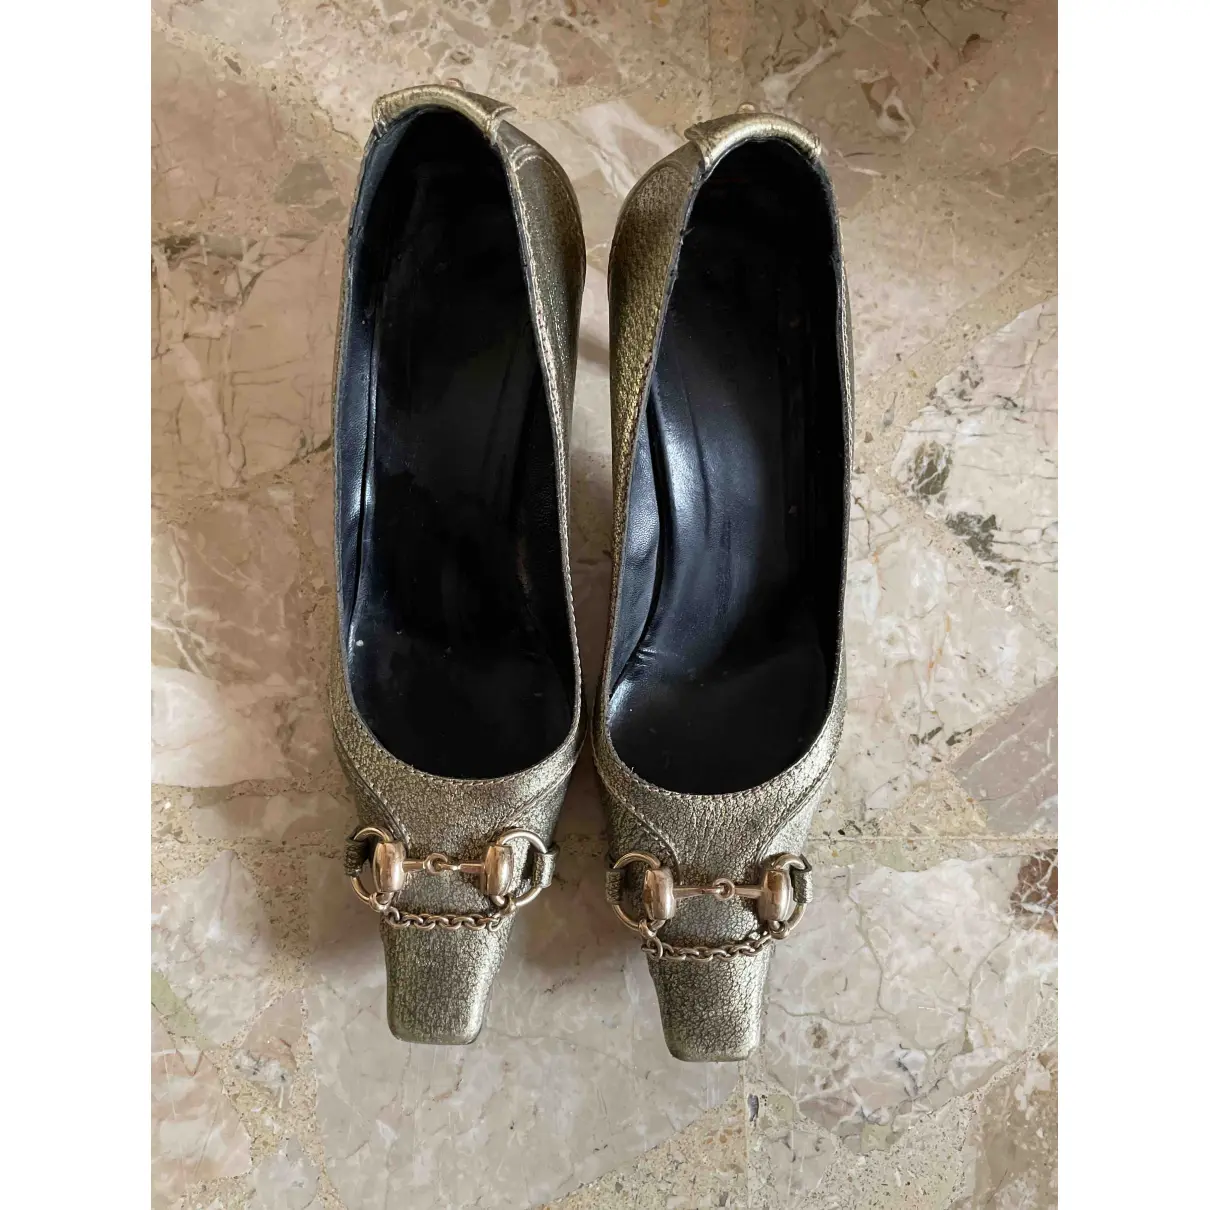 Buy Gucci Leather heels online - Vintage